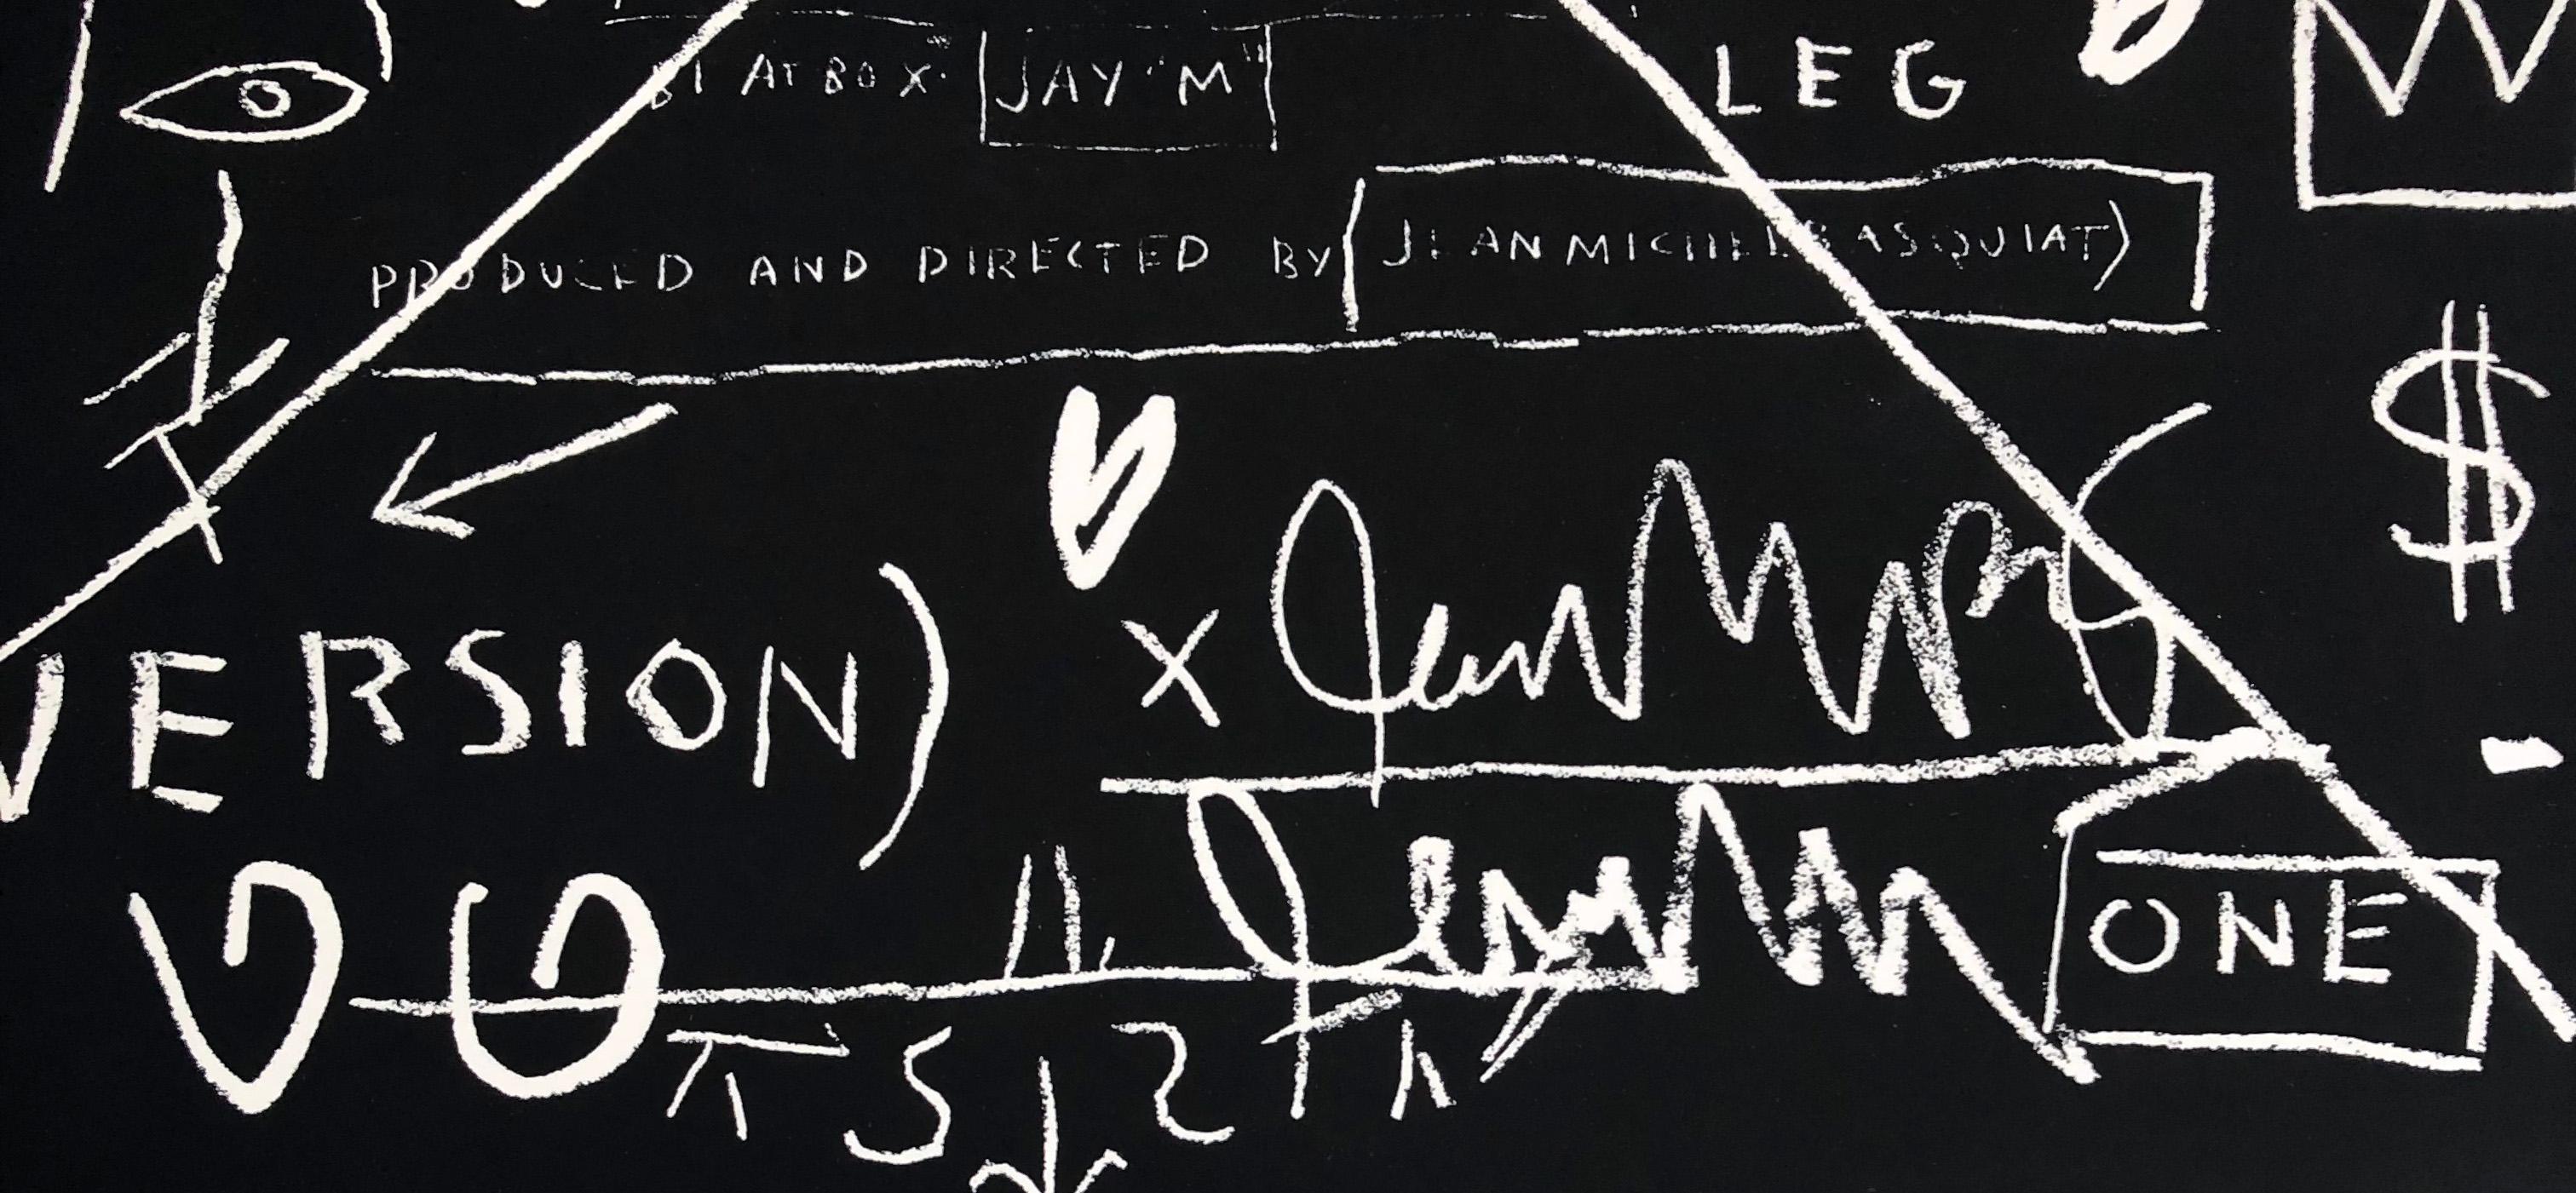 Basquiat Beat Bop Record Art 2